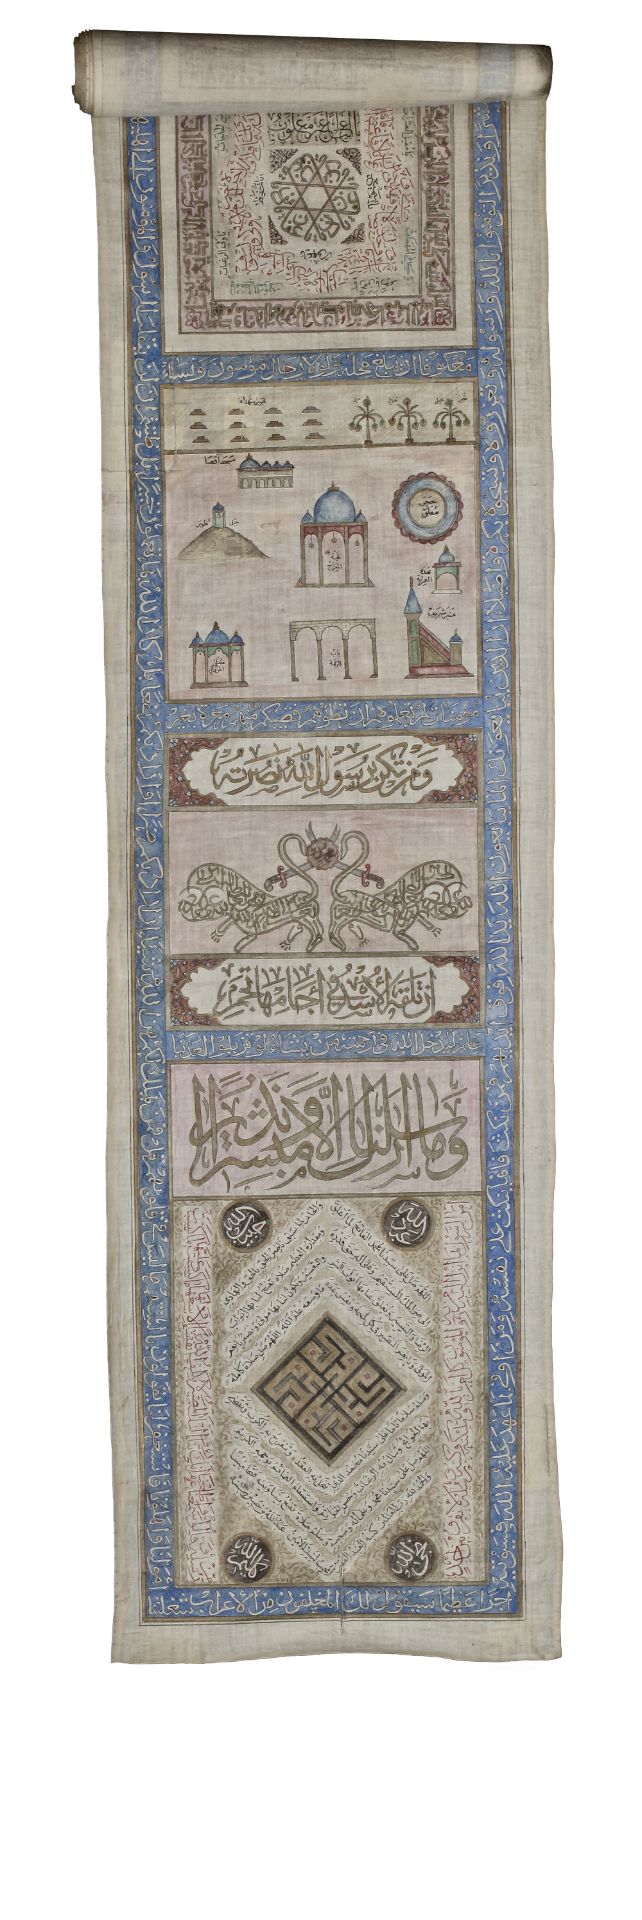 AN OTTOMAN ILLUMINATED HAJJ SCROLL, WRITTEN BY ABDUL-ALAH BIN HUSSAIN IN 1287 AH/1873 AD - Image 9 of 12